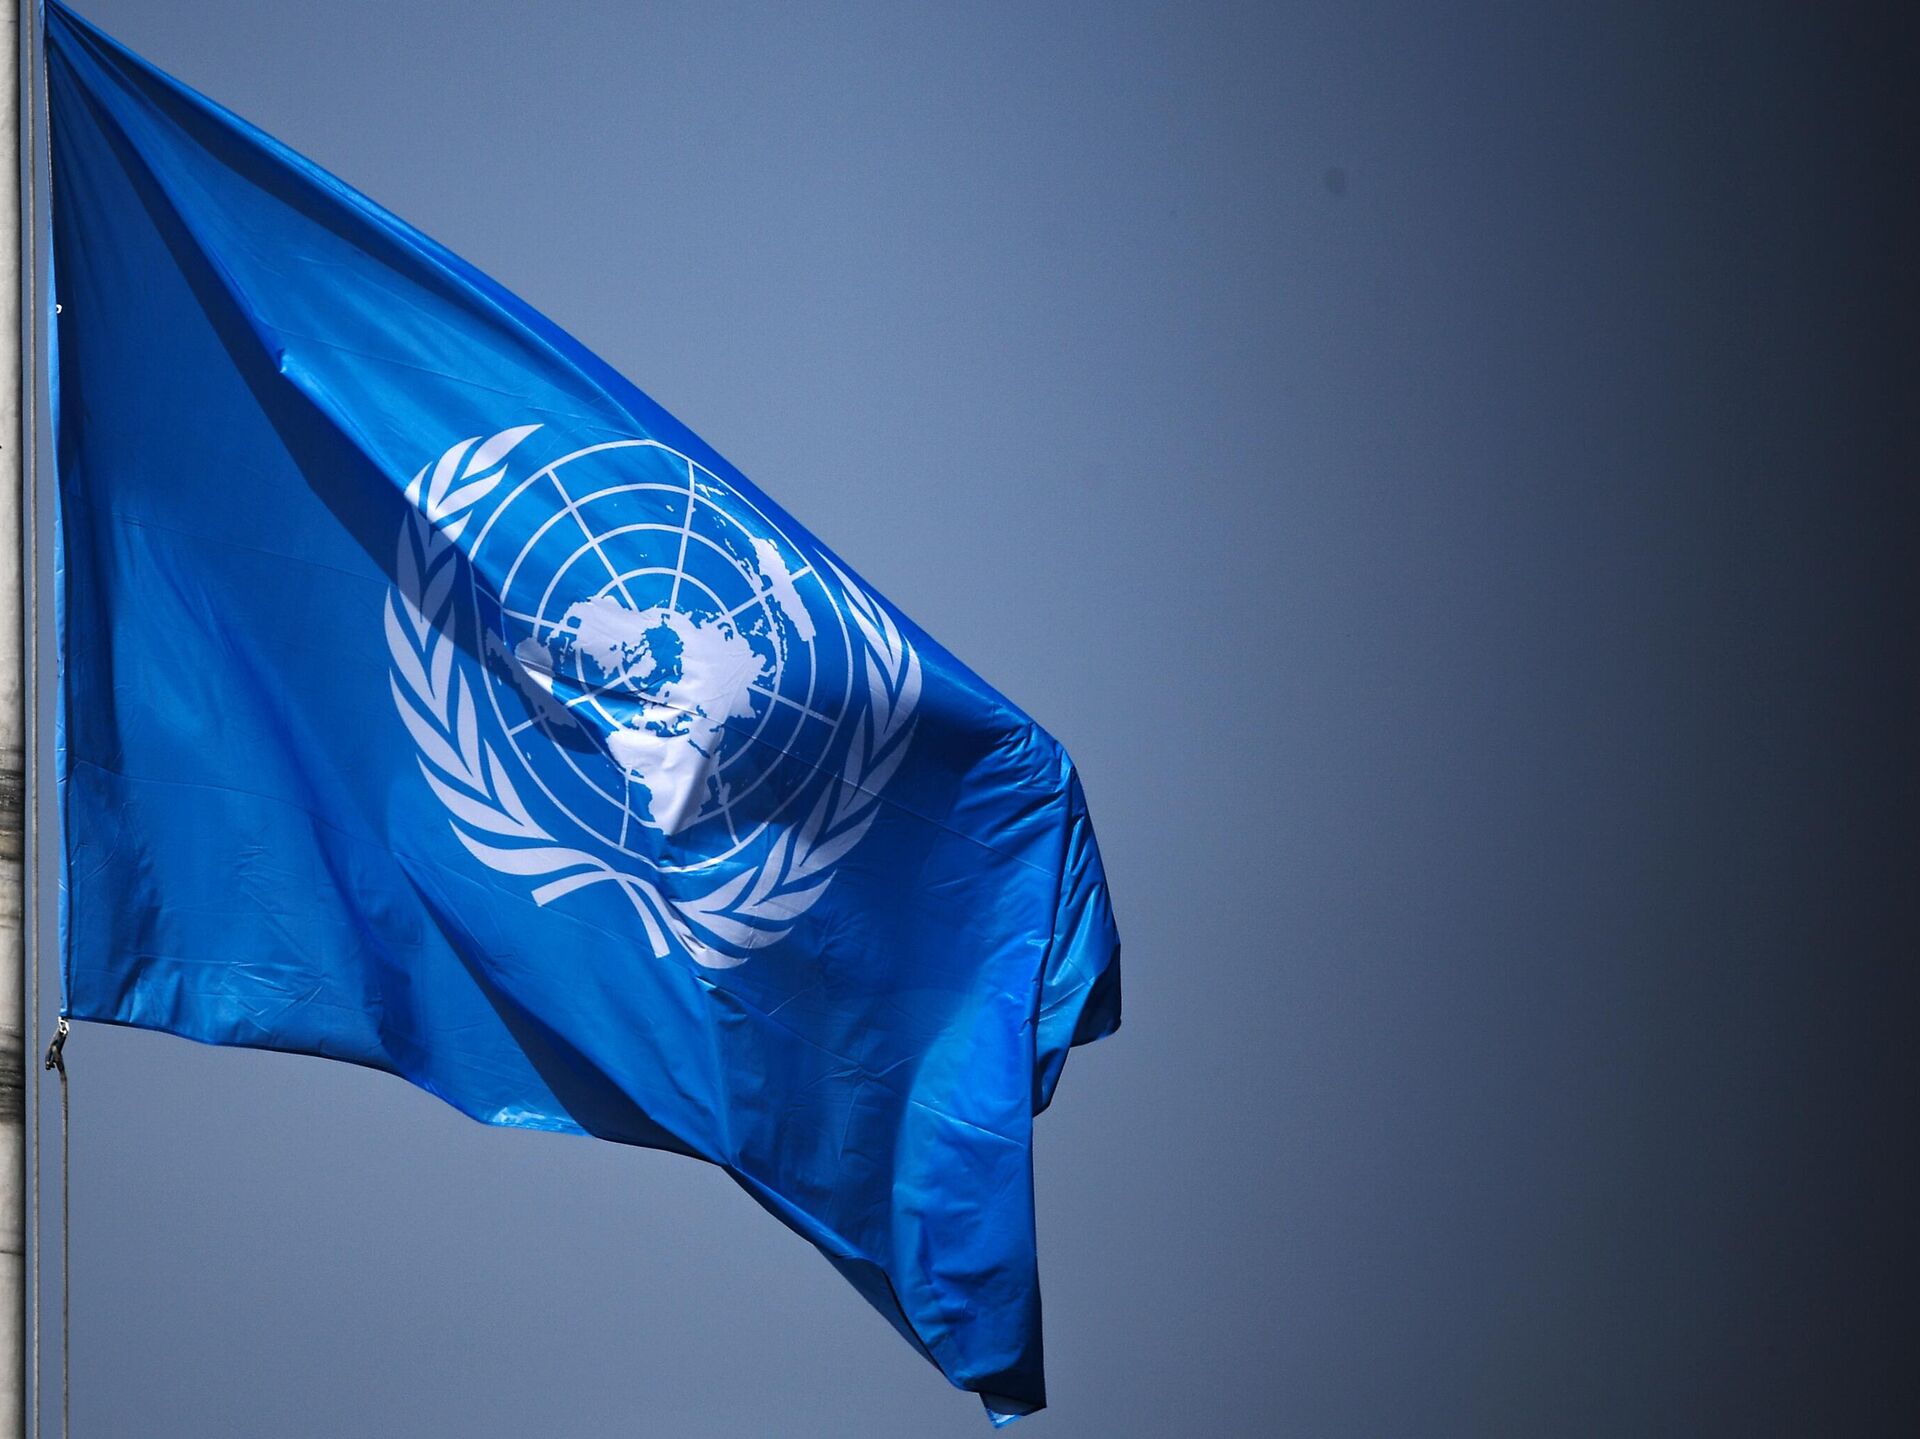 Е оон. Флаг ООН. Флаг организации Объединенных наций. Организация Объединенных наций (ООН). Генеральная Ассамблея ООН флаг.